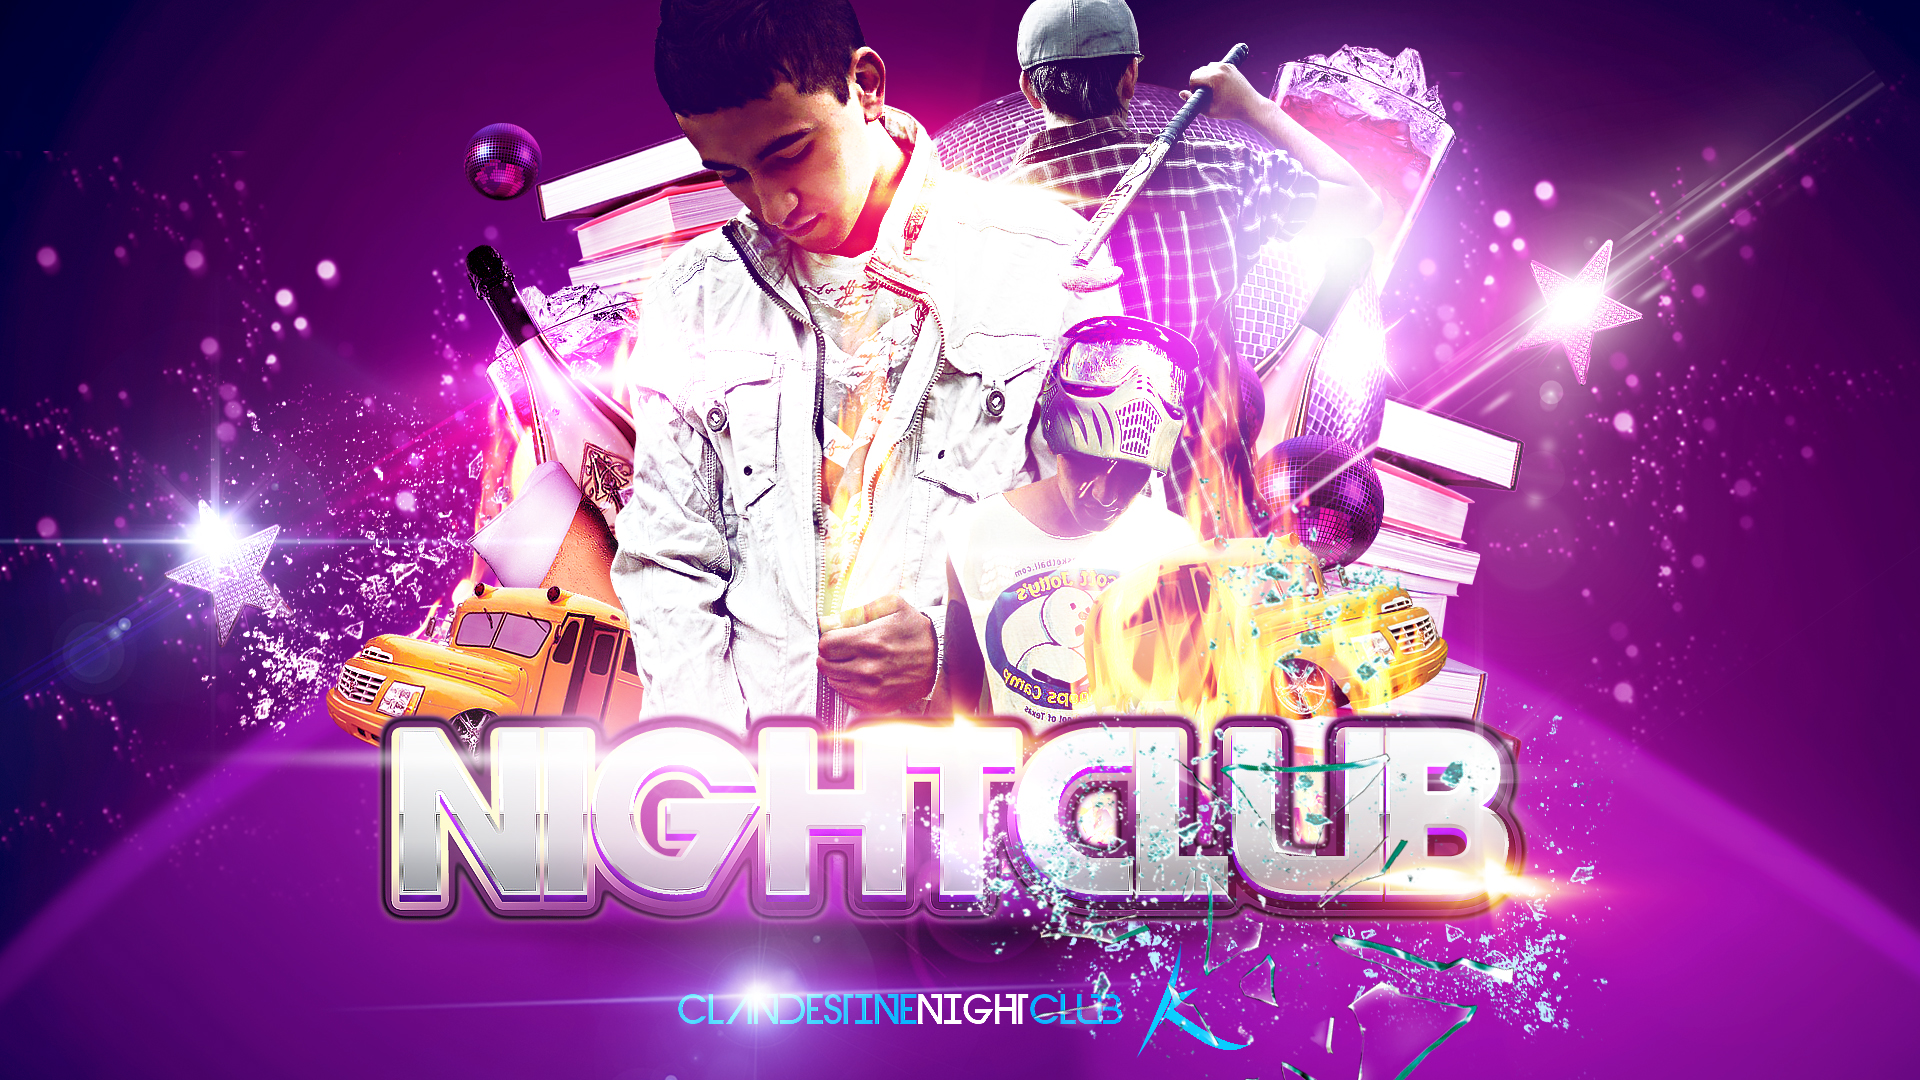 Night Clubs Wallpaper Clandestine night club 4 by